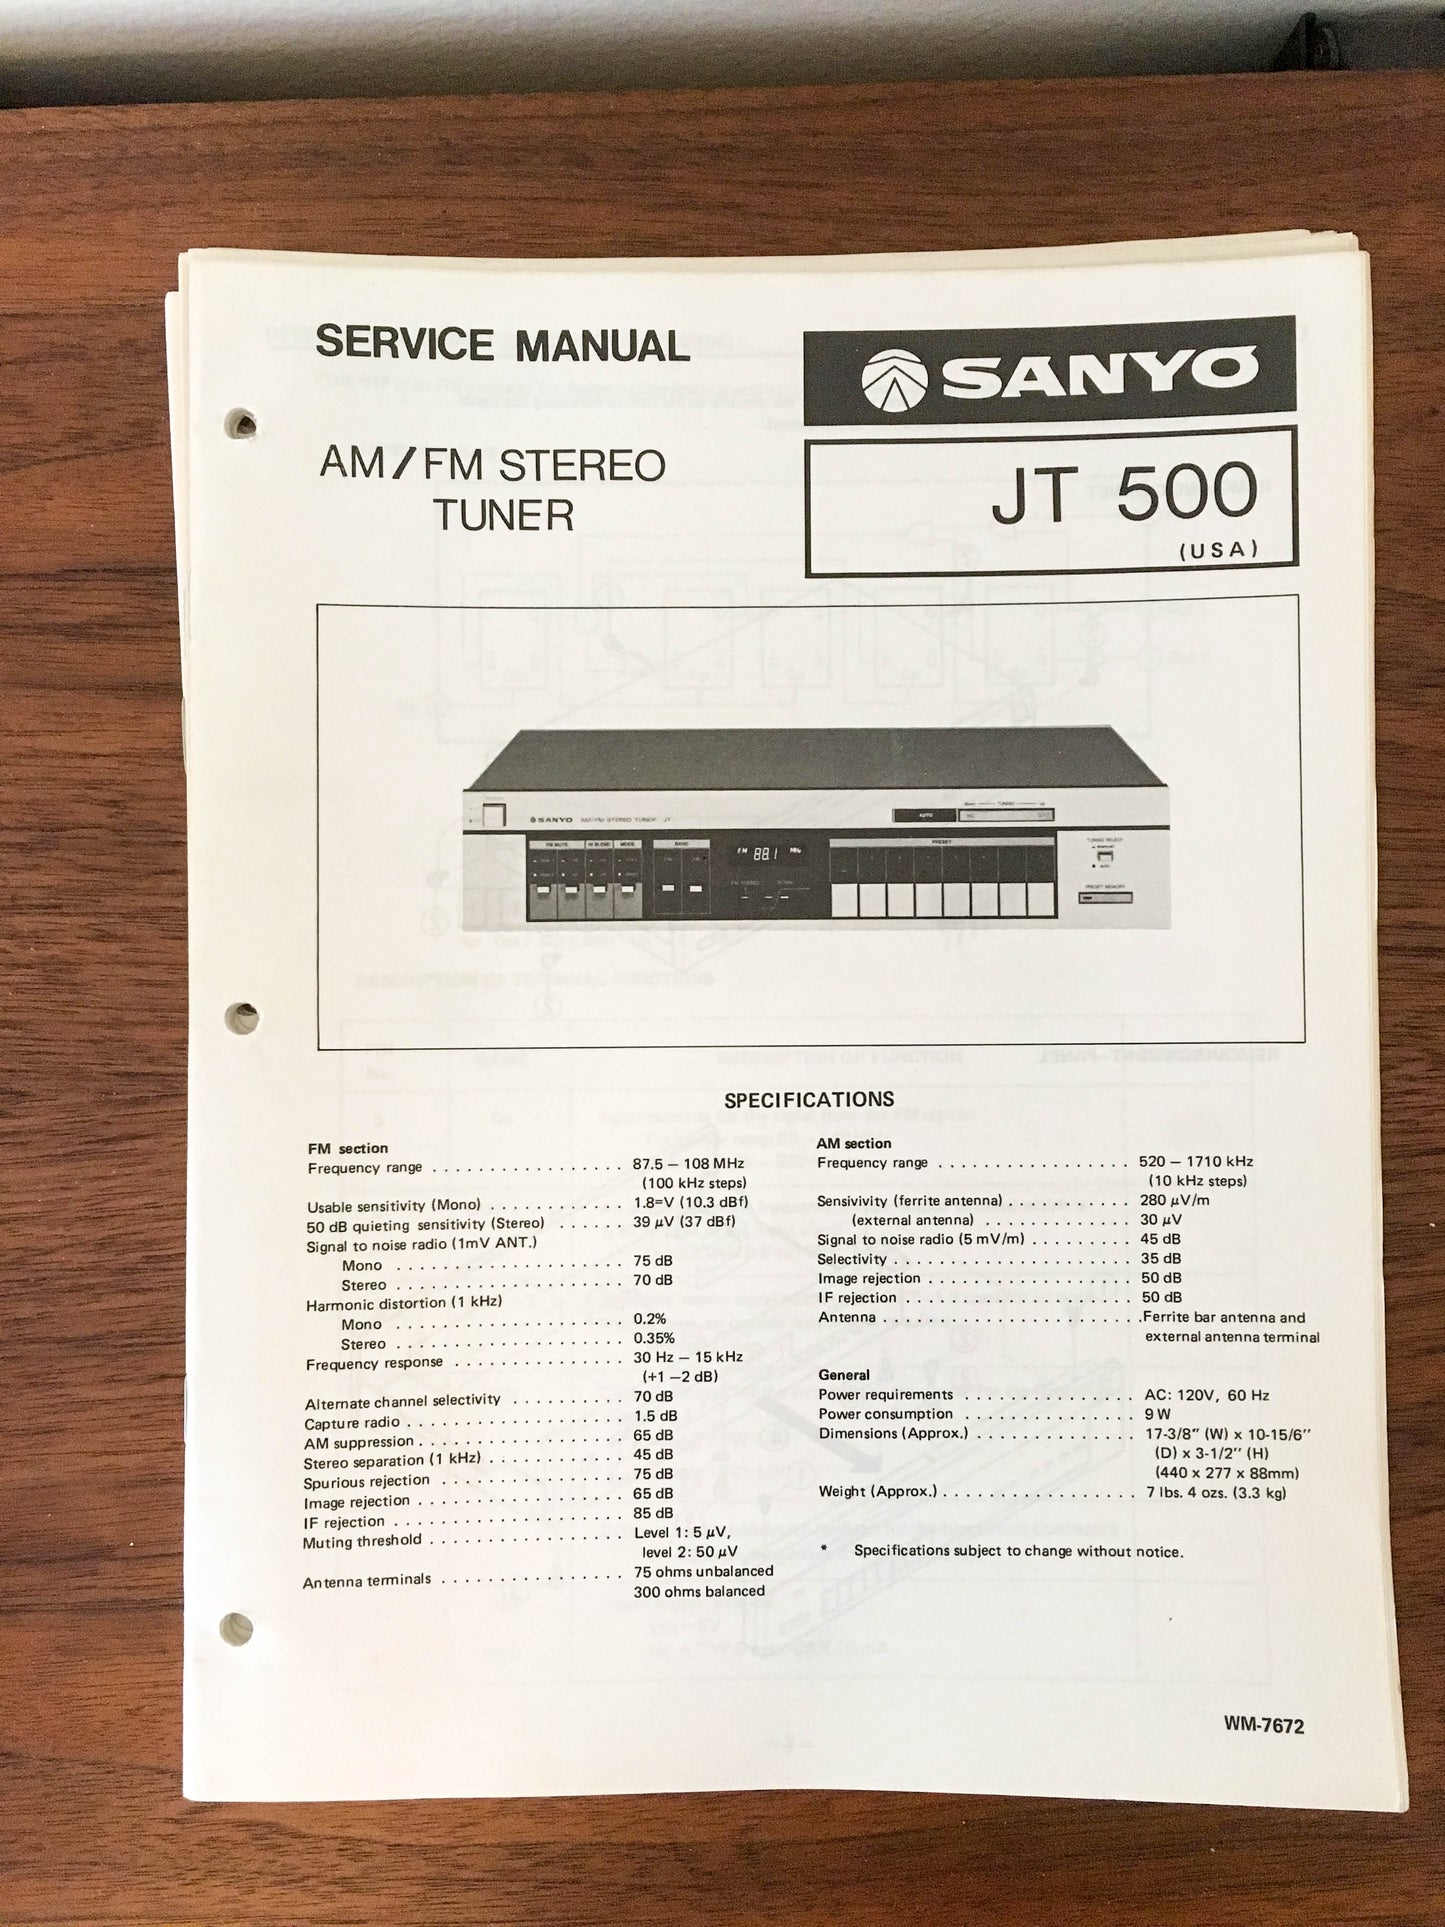 Sanyo JT 500 Tuner Service Manual *Original*